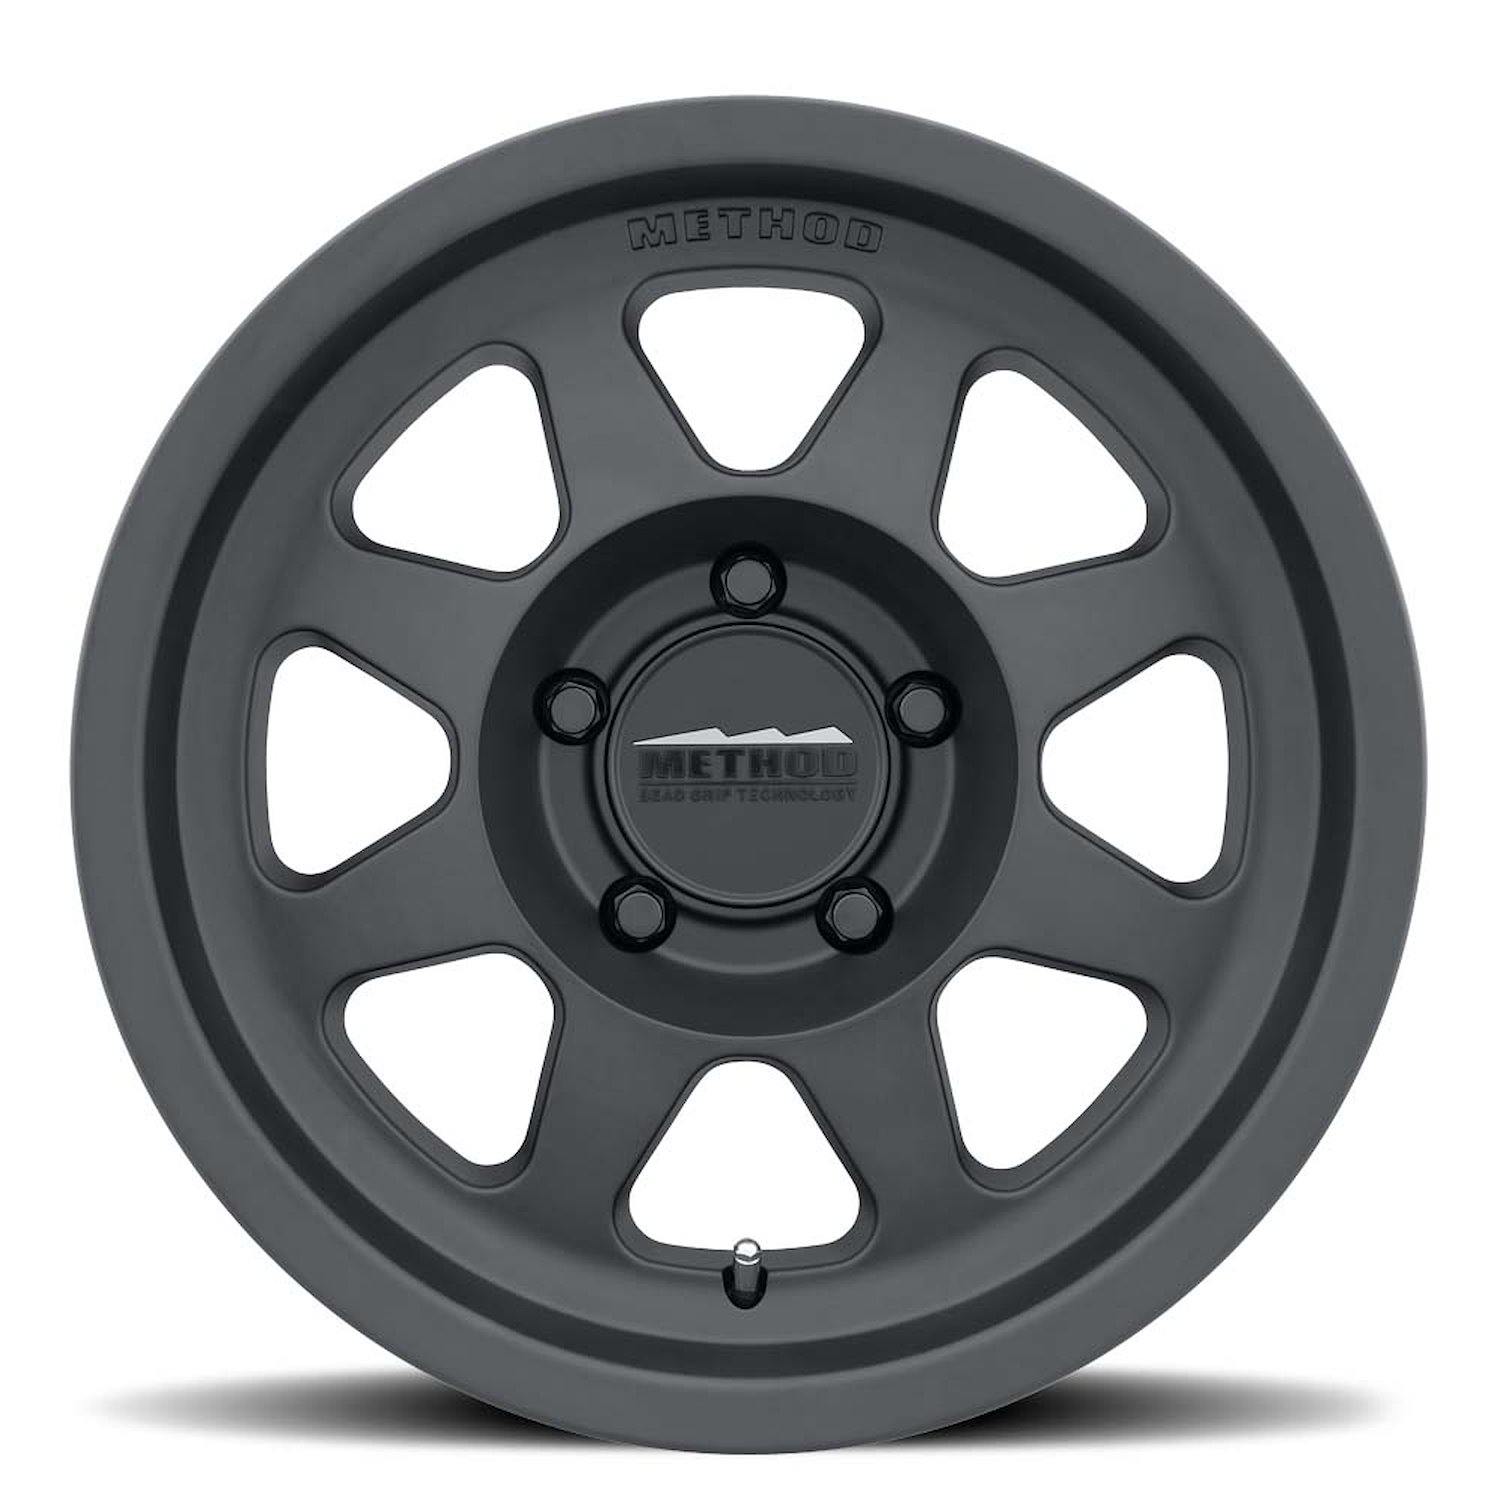 MR70178558500 TRAIL MR701 Bead Grip Wheel [Size: 17" x 8.5"] Matte Black